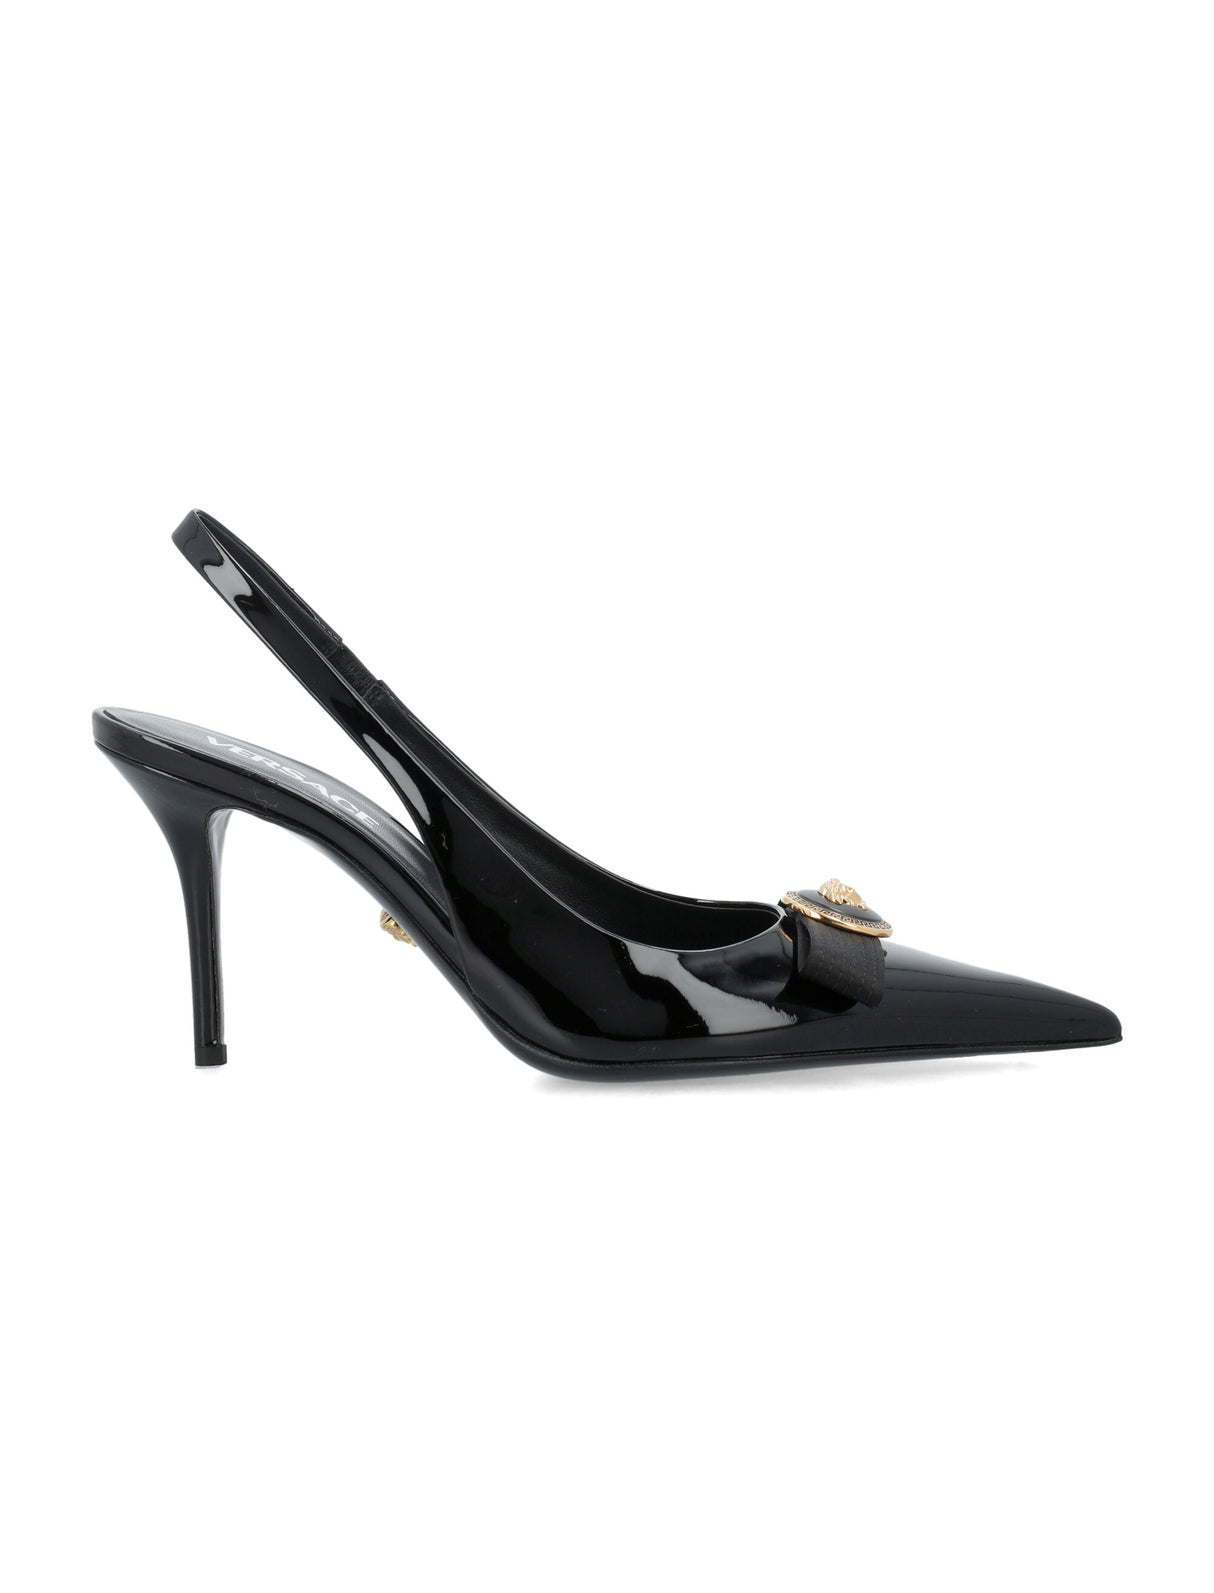 224-Versace折帶中踝泵鞋 - 黑色